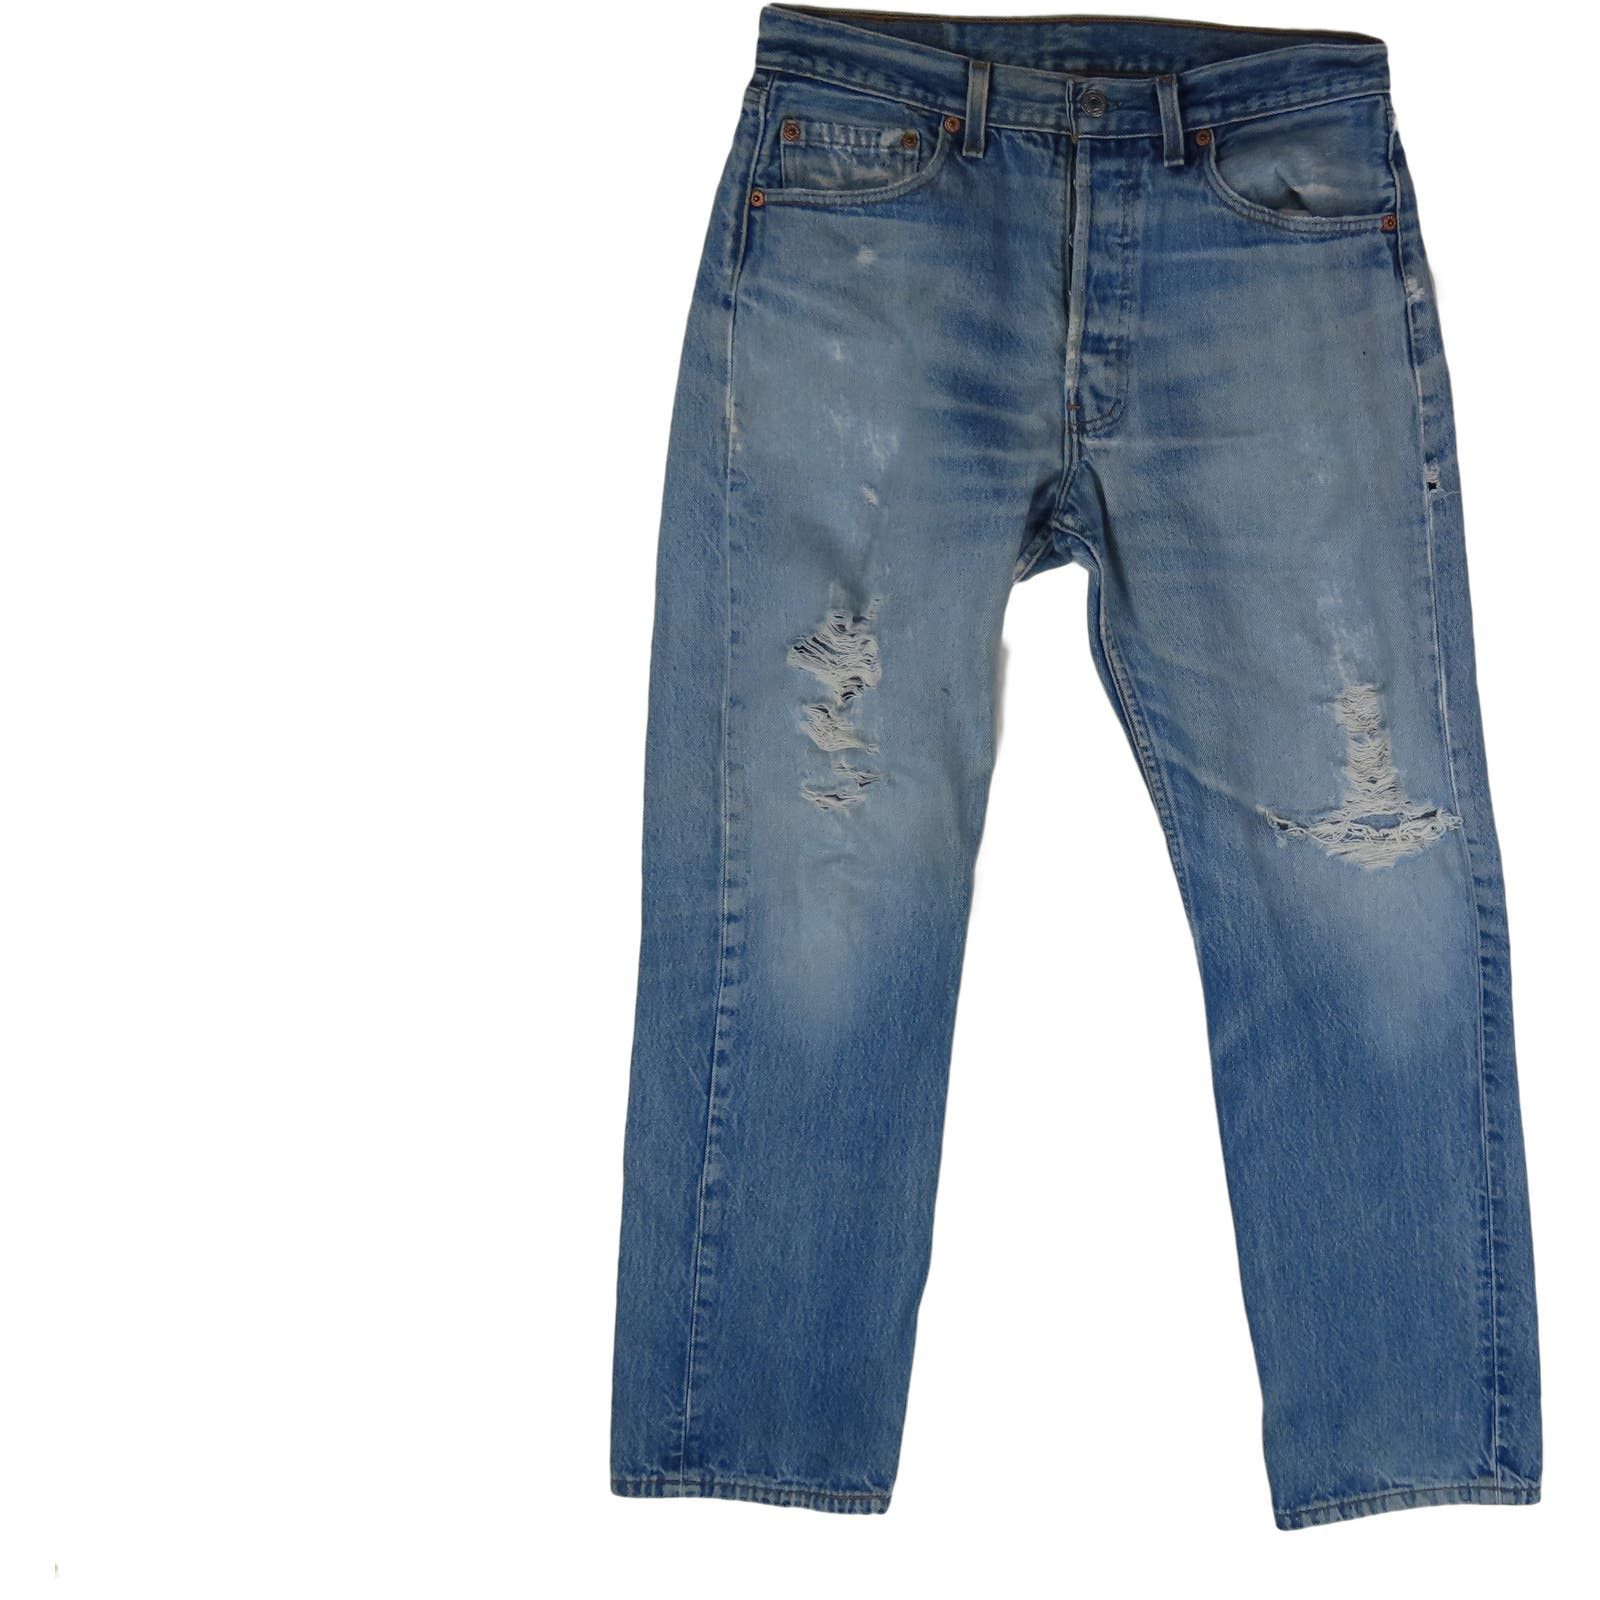 Levi's Vintage Levi's 501 High Waisted Denim Jeans 31 Size US 31 - 1 Preview